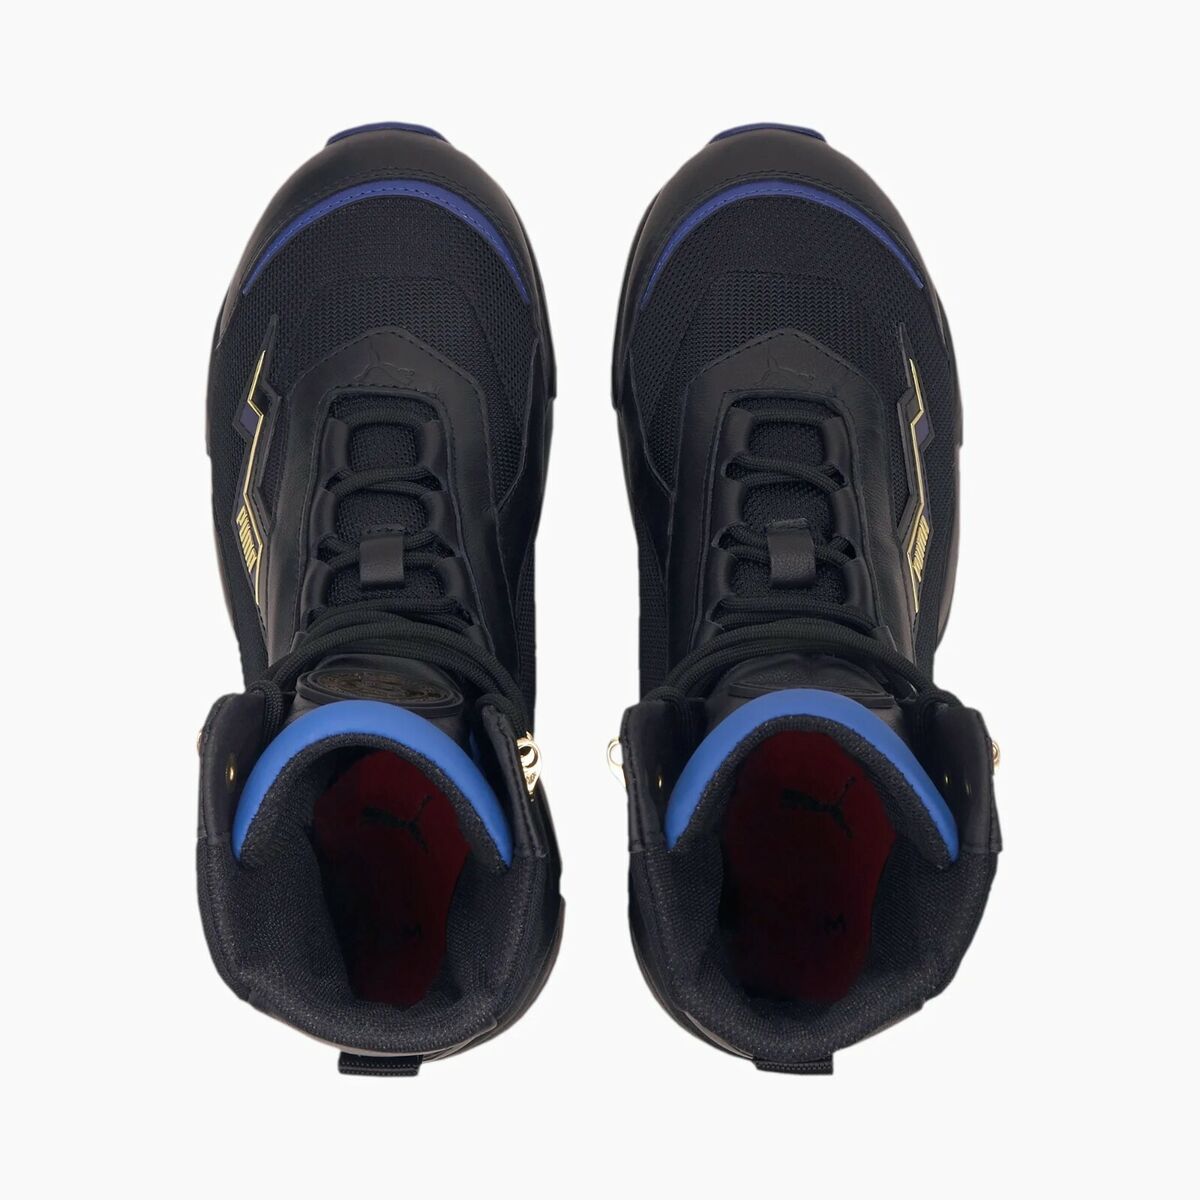  PUMA Women's x Balmain Cell Stellar Sneakers, Black, 5.5  Medium US